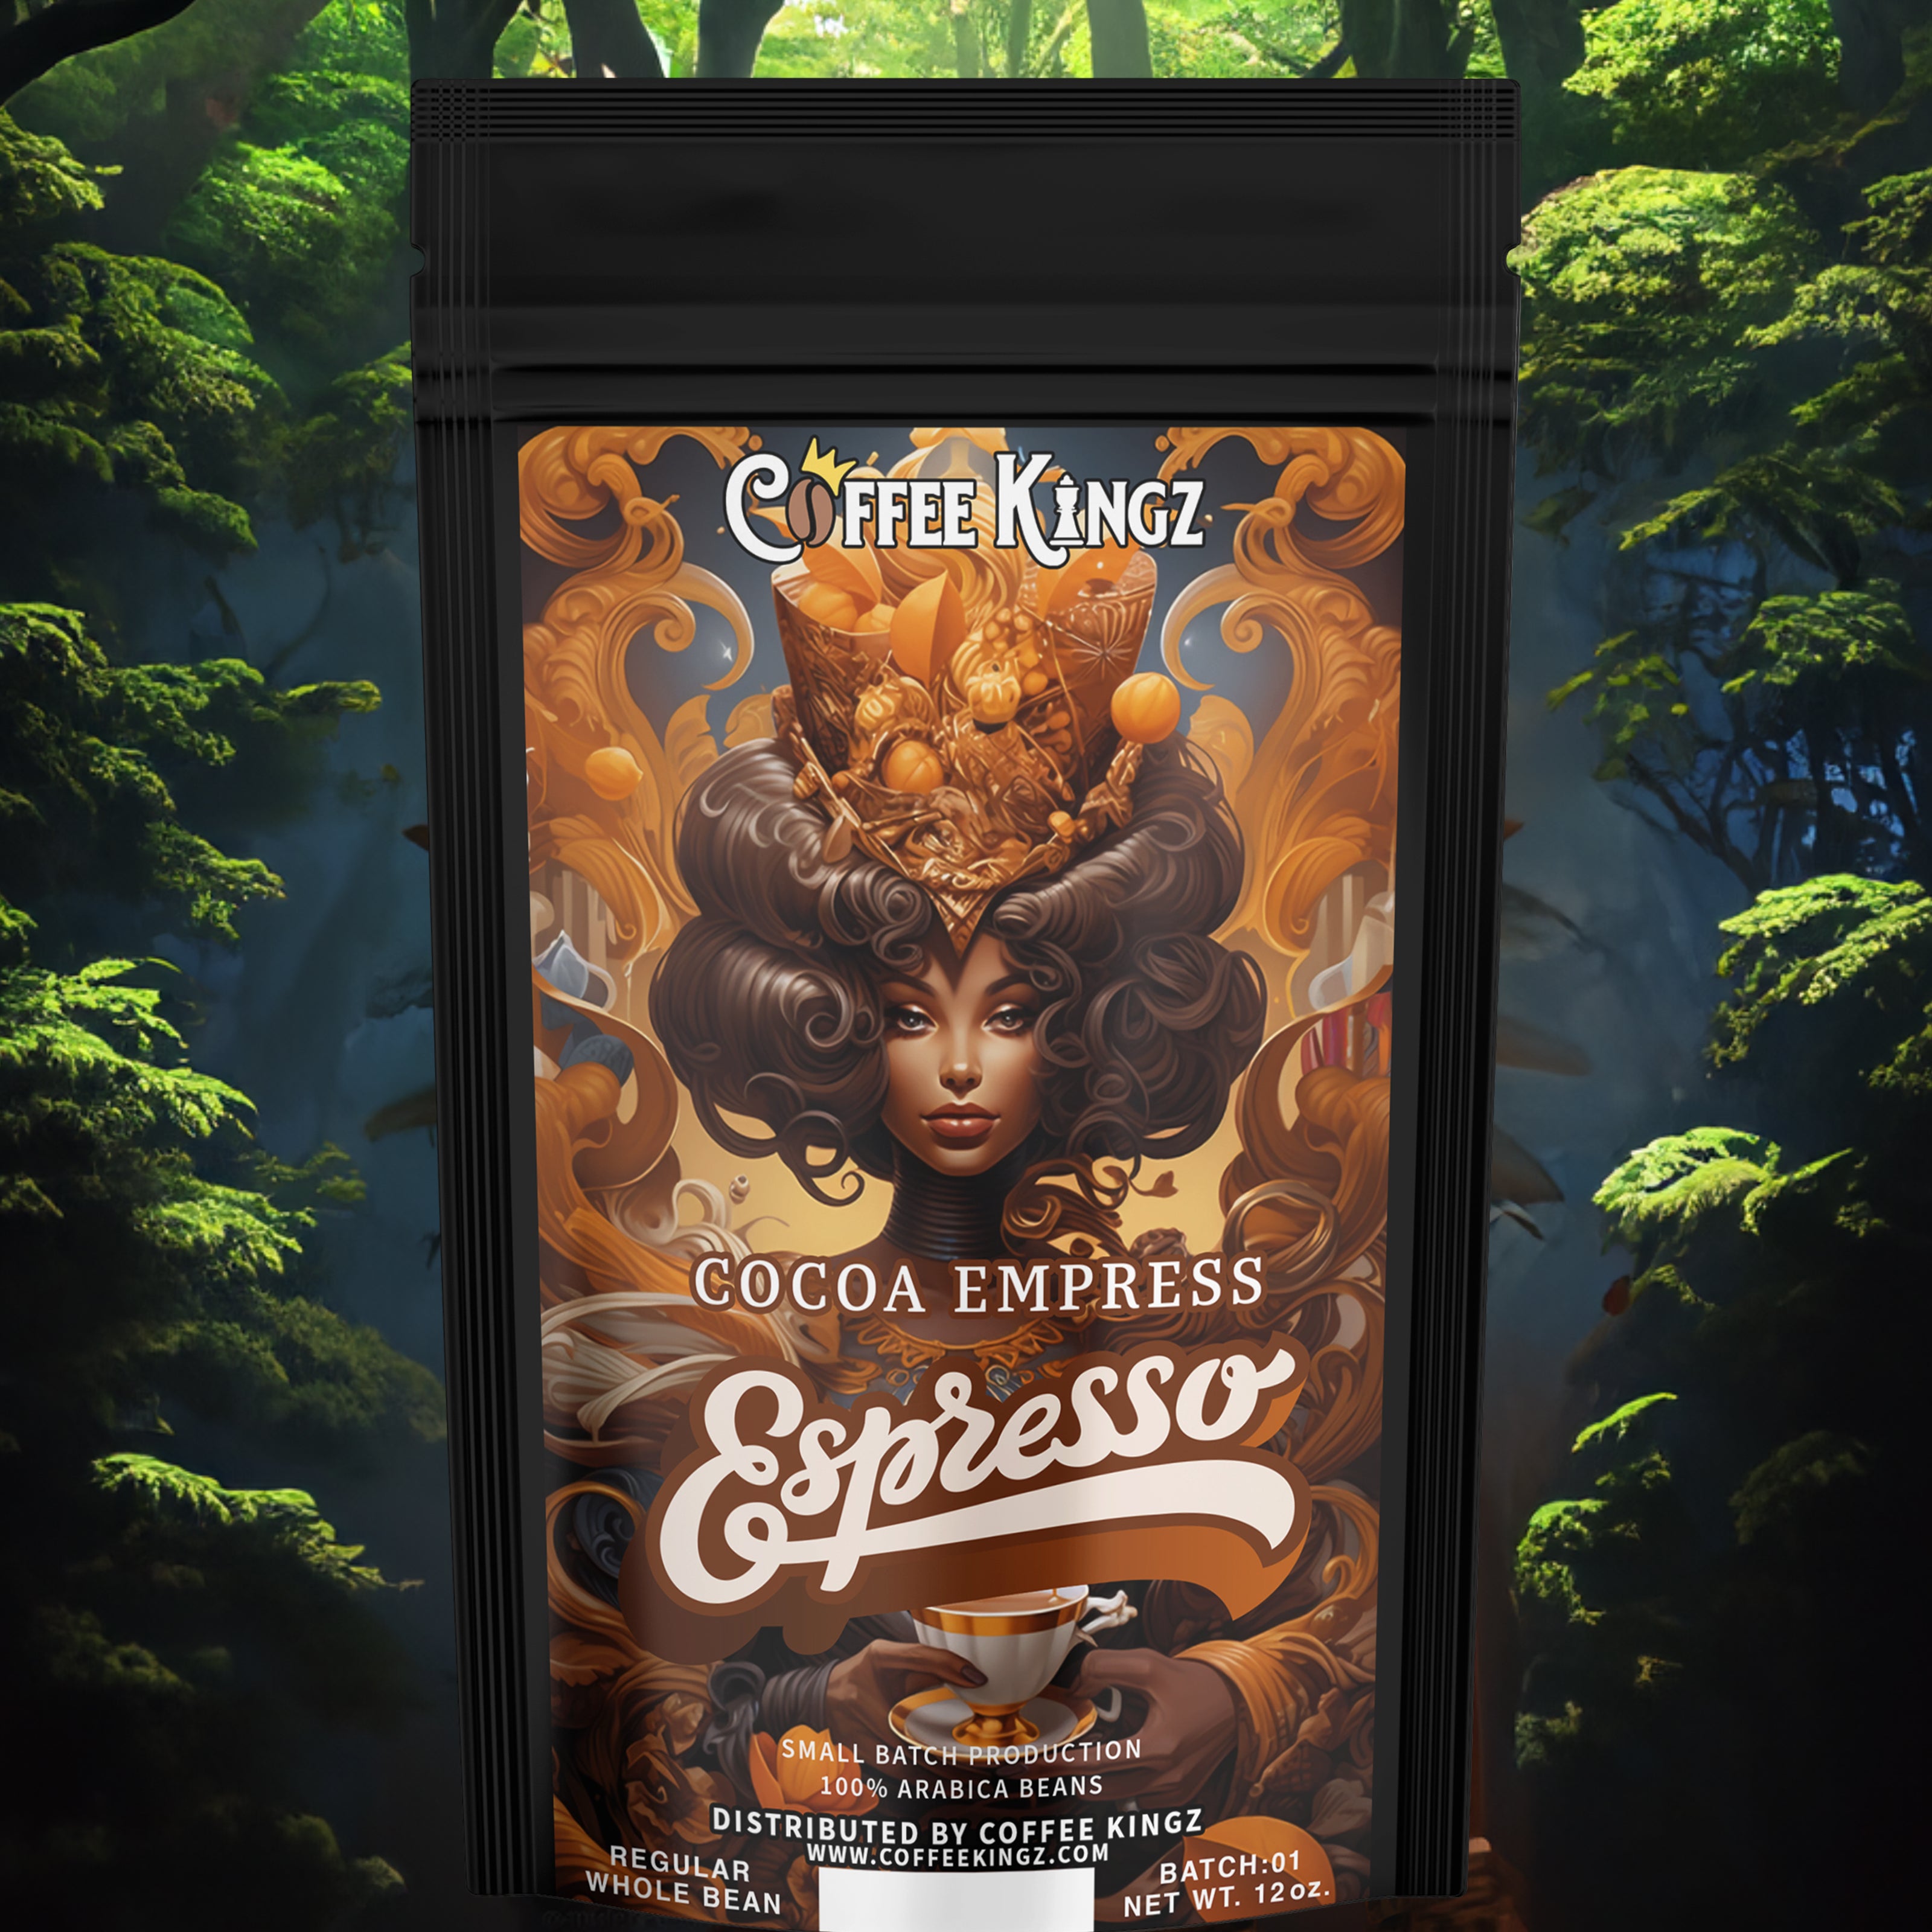 Cocoa Empress Espresso branding: Freshly ground & roasted on order. Artisanal coffee